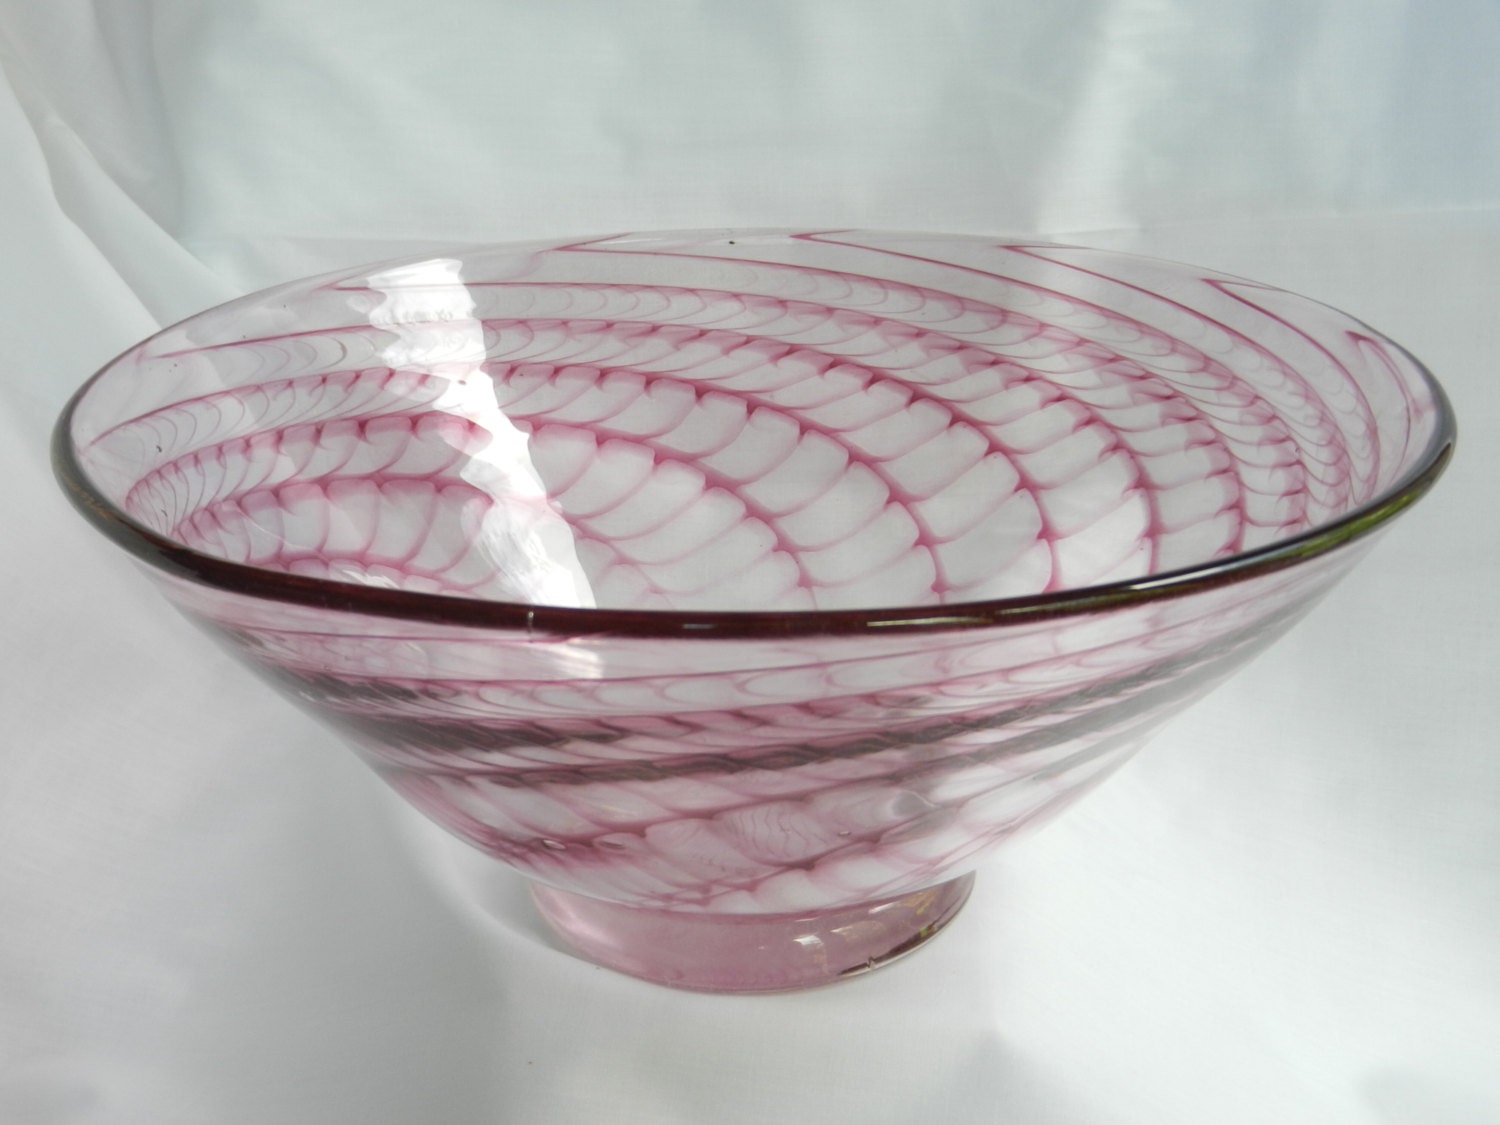 Handblown large cranberry glass bowl in herringbone spiral